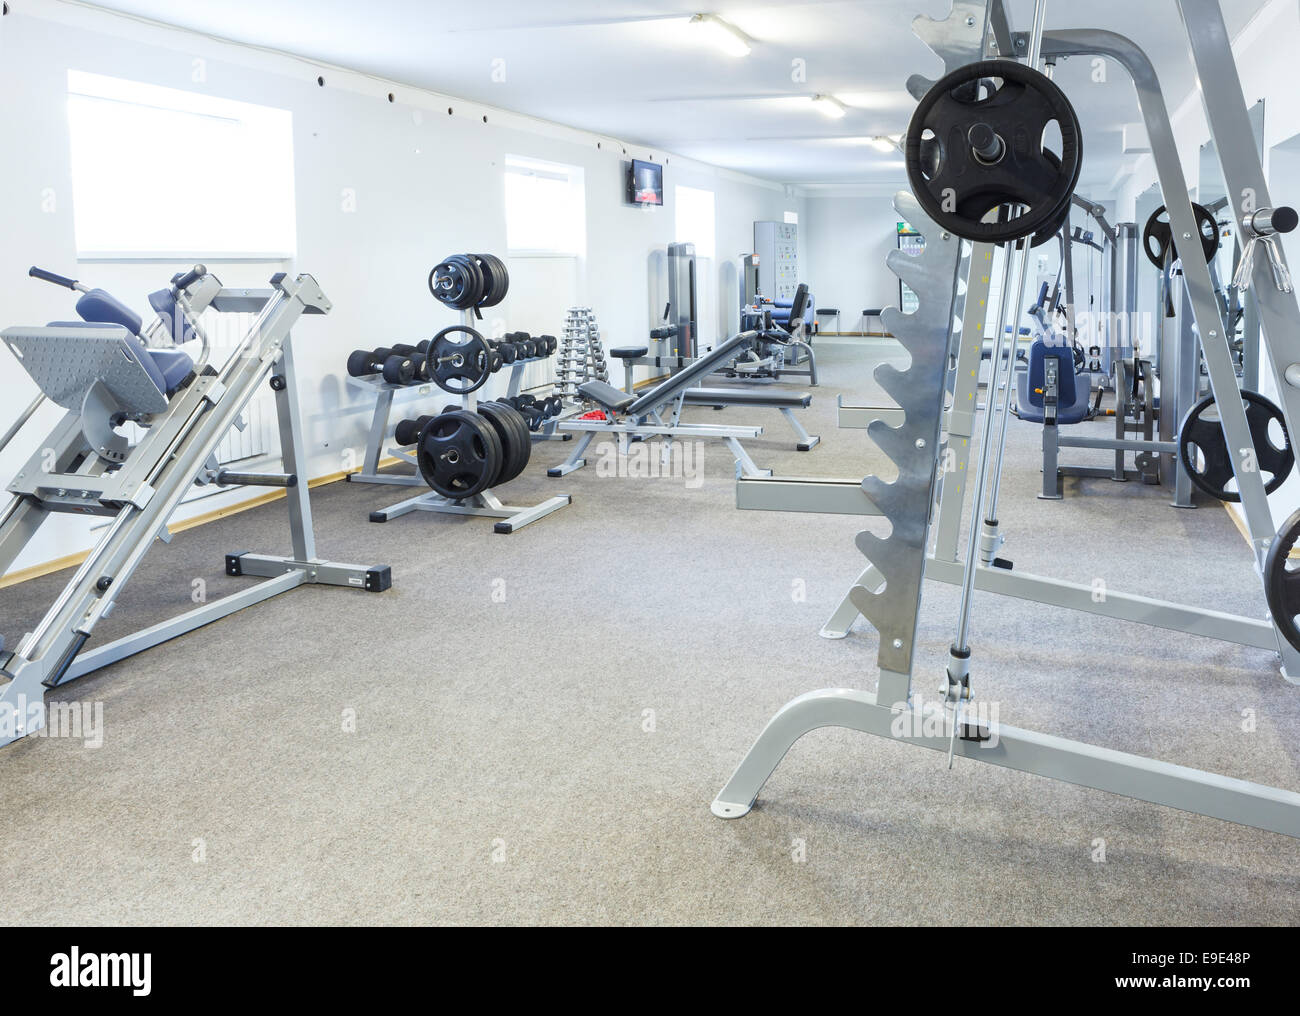 Fitness club interior. Stock Photo